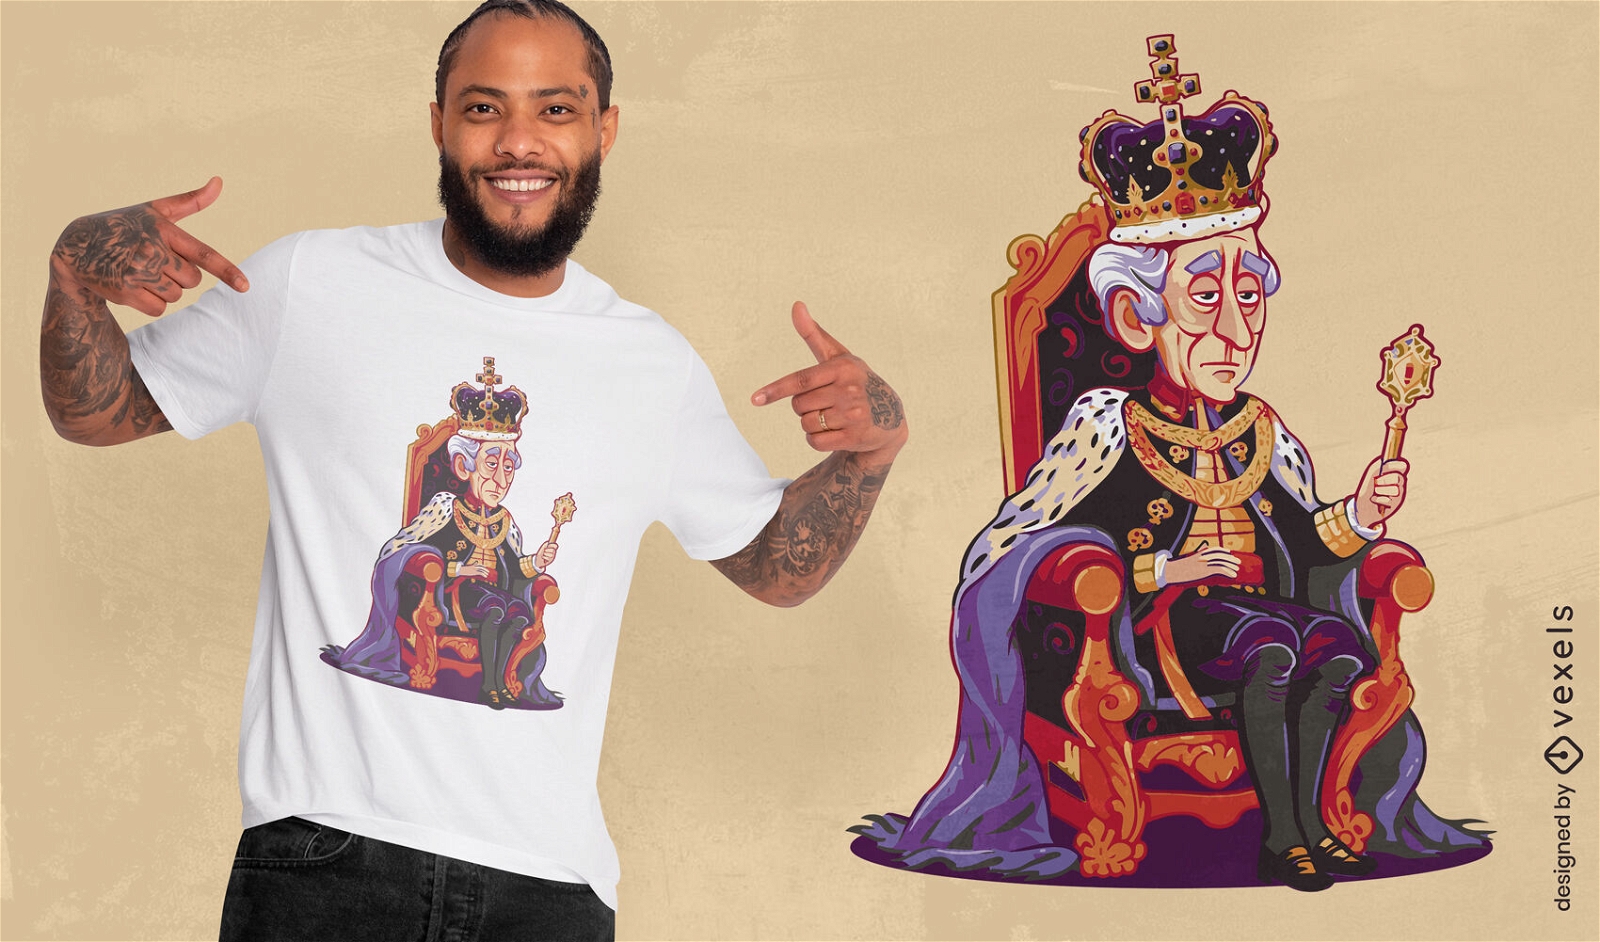 King of england cartoon t-shirt design